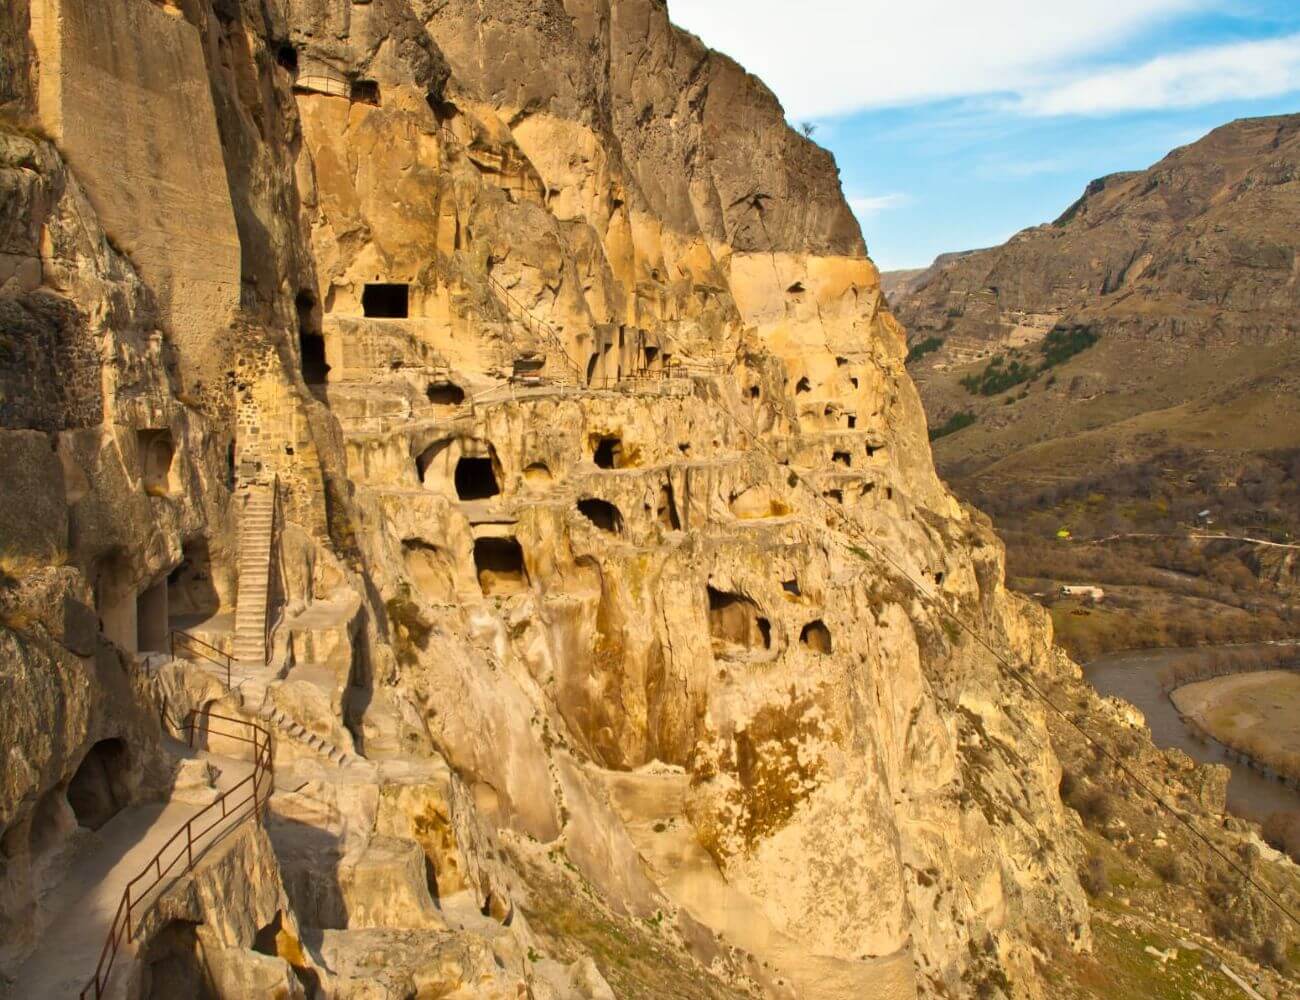 1-Day Tour to Georgia: the cave town of Vardzia and Akhaltsikhe from Tbilisi